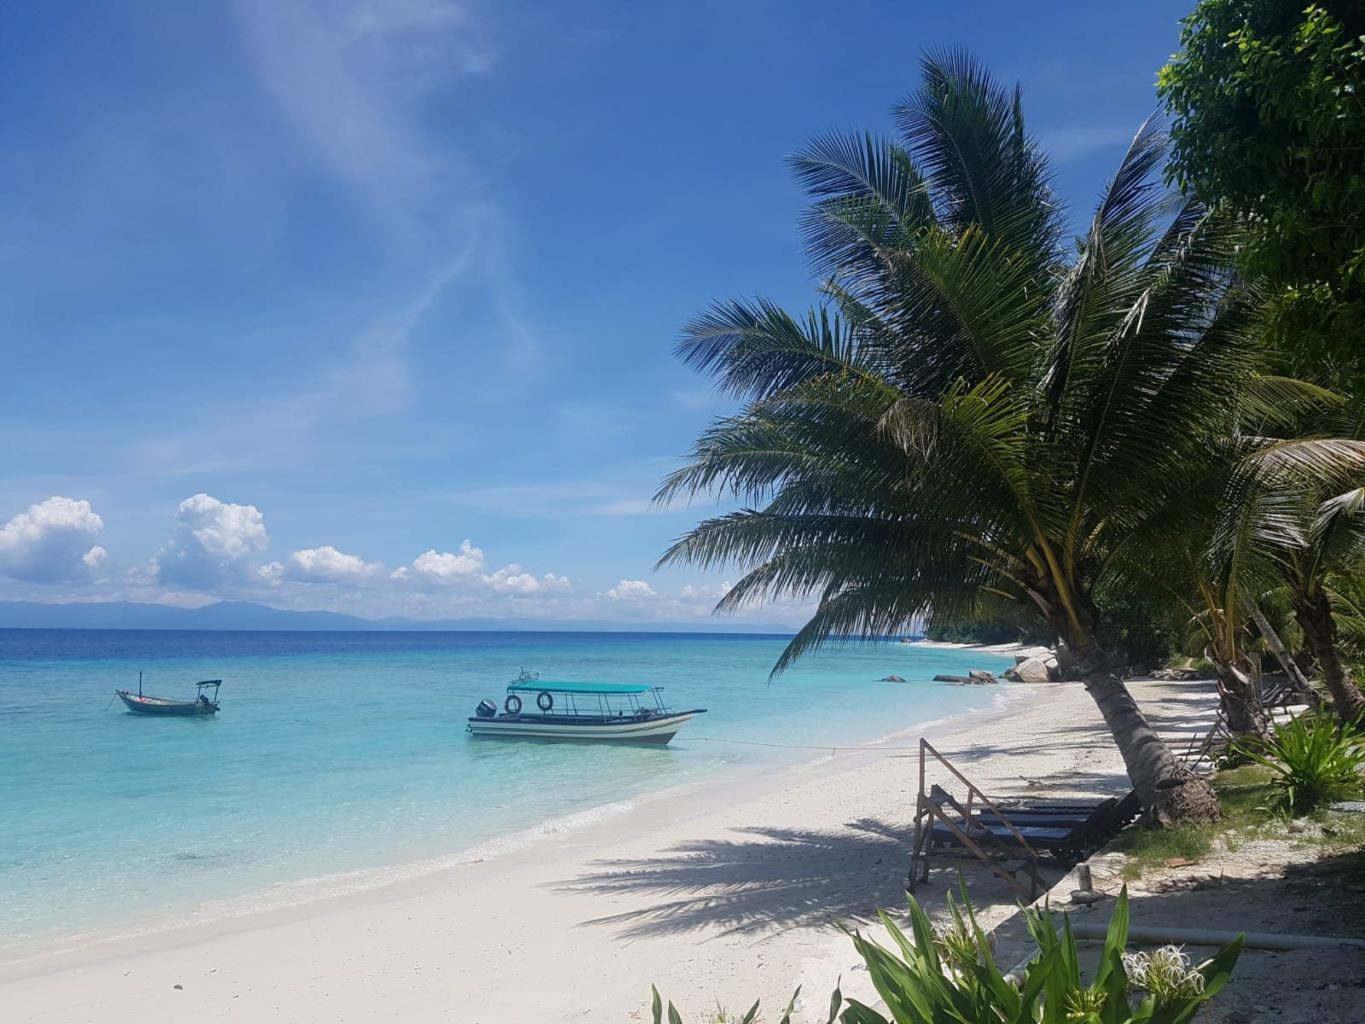 Pulau Lang Tengah